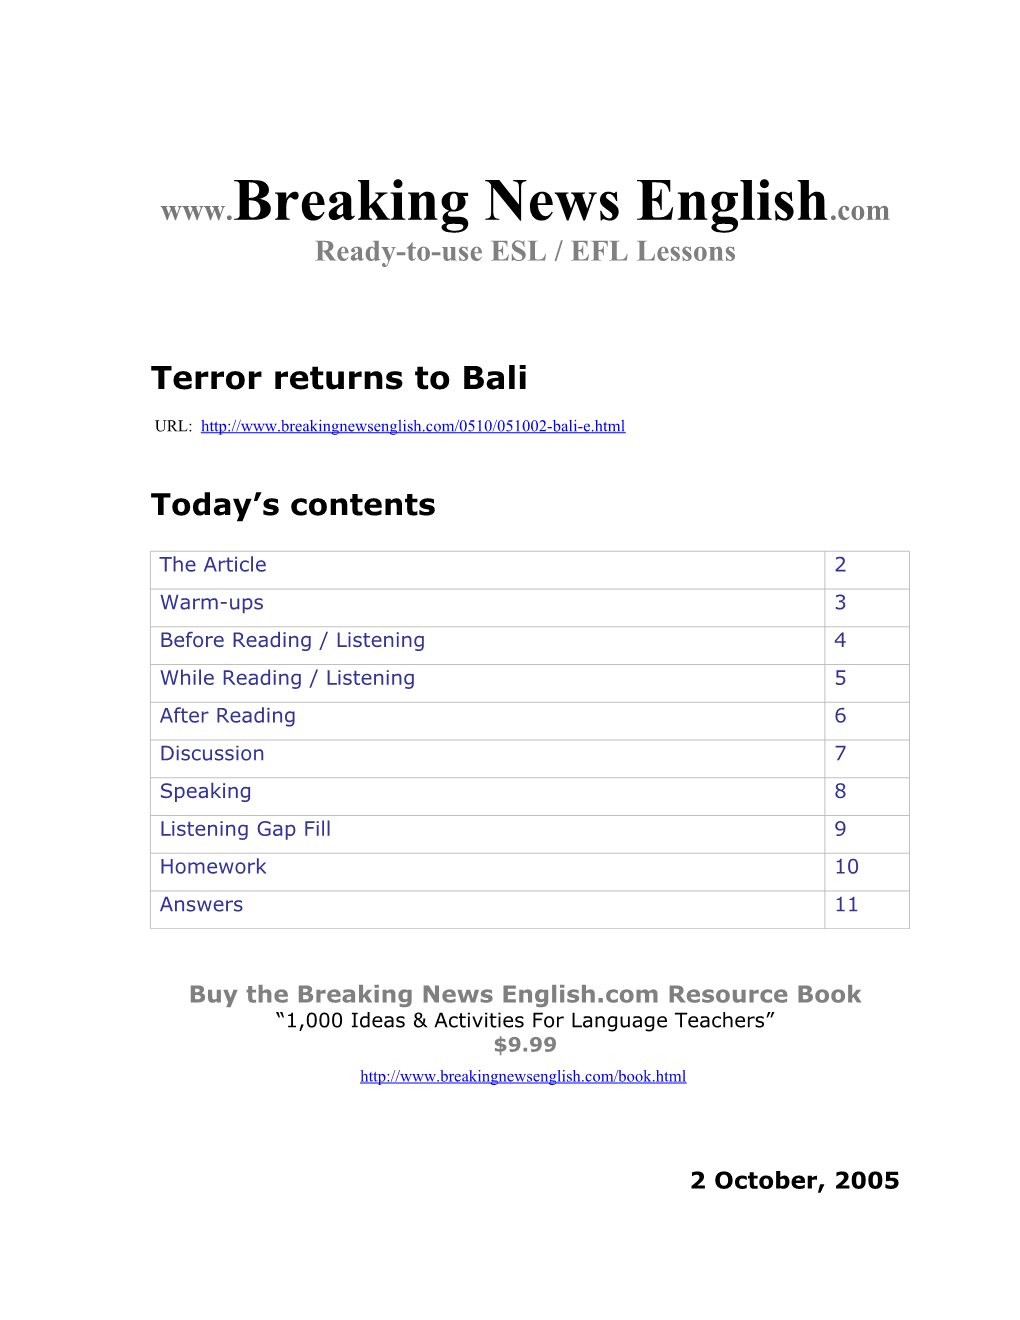 Terror Returns to Bali